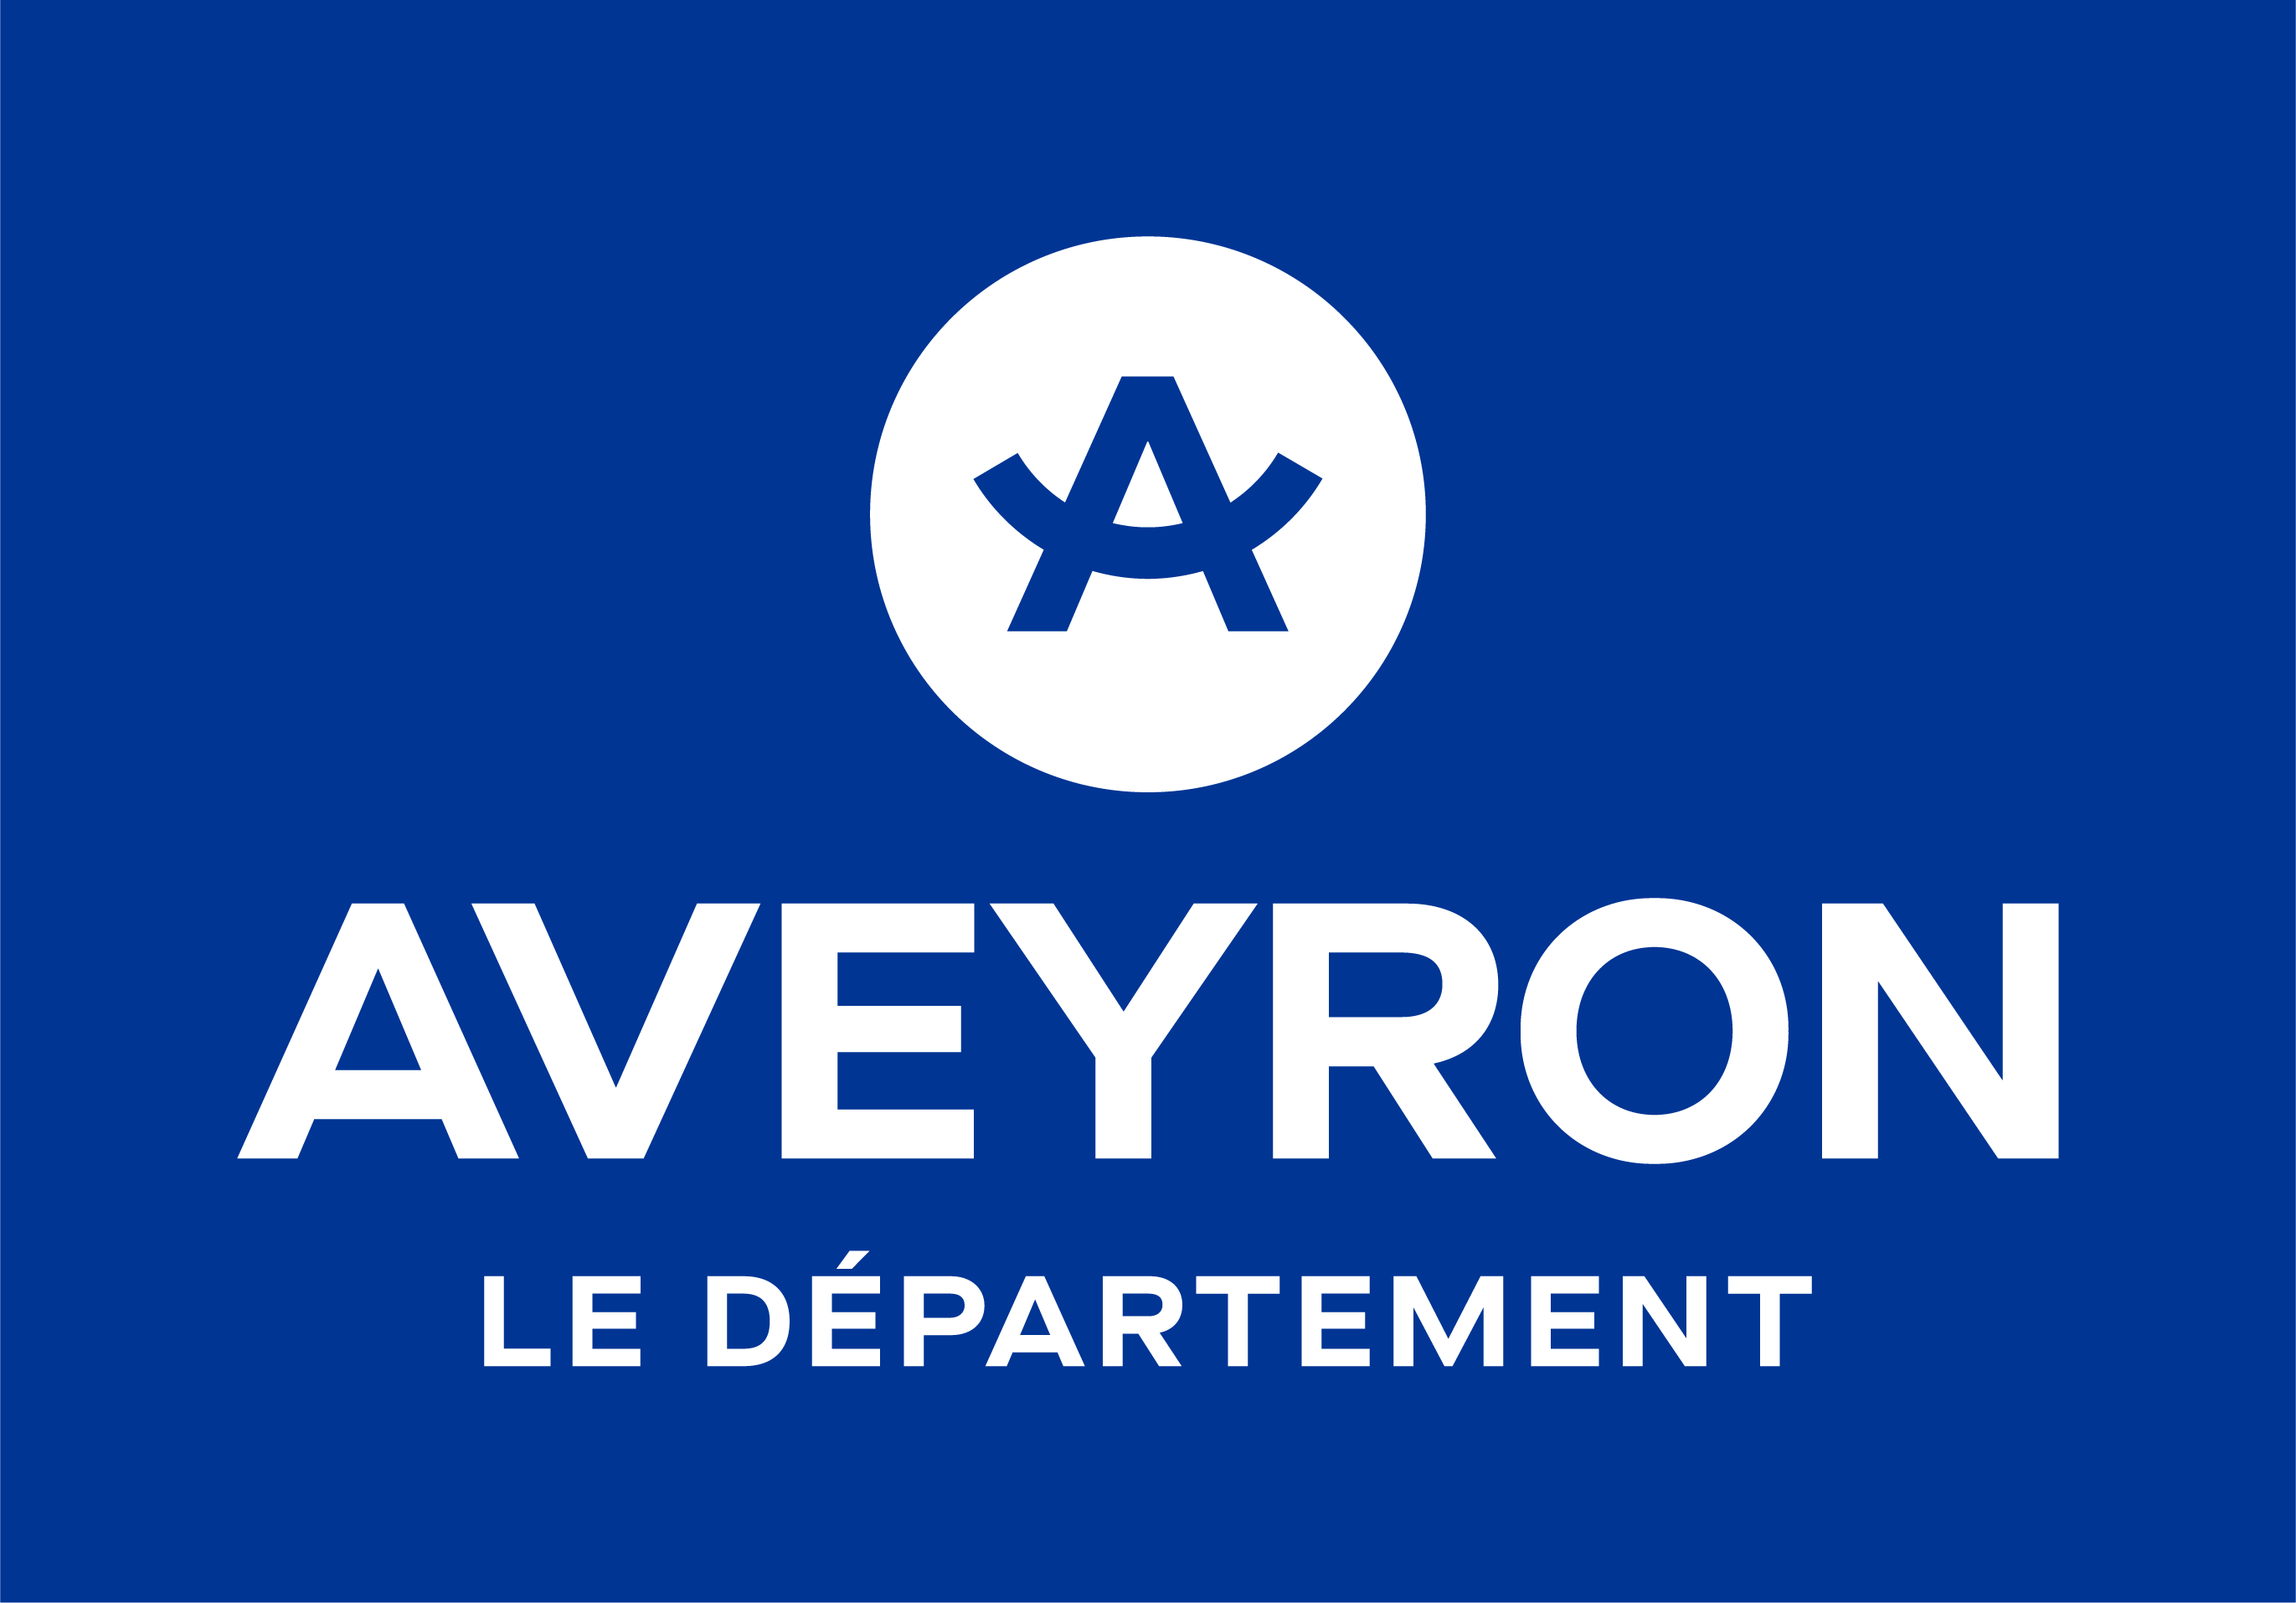 aveyron-logo-blancsurbleu-vertical.png